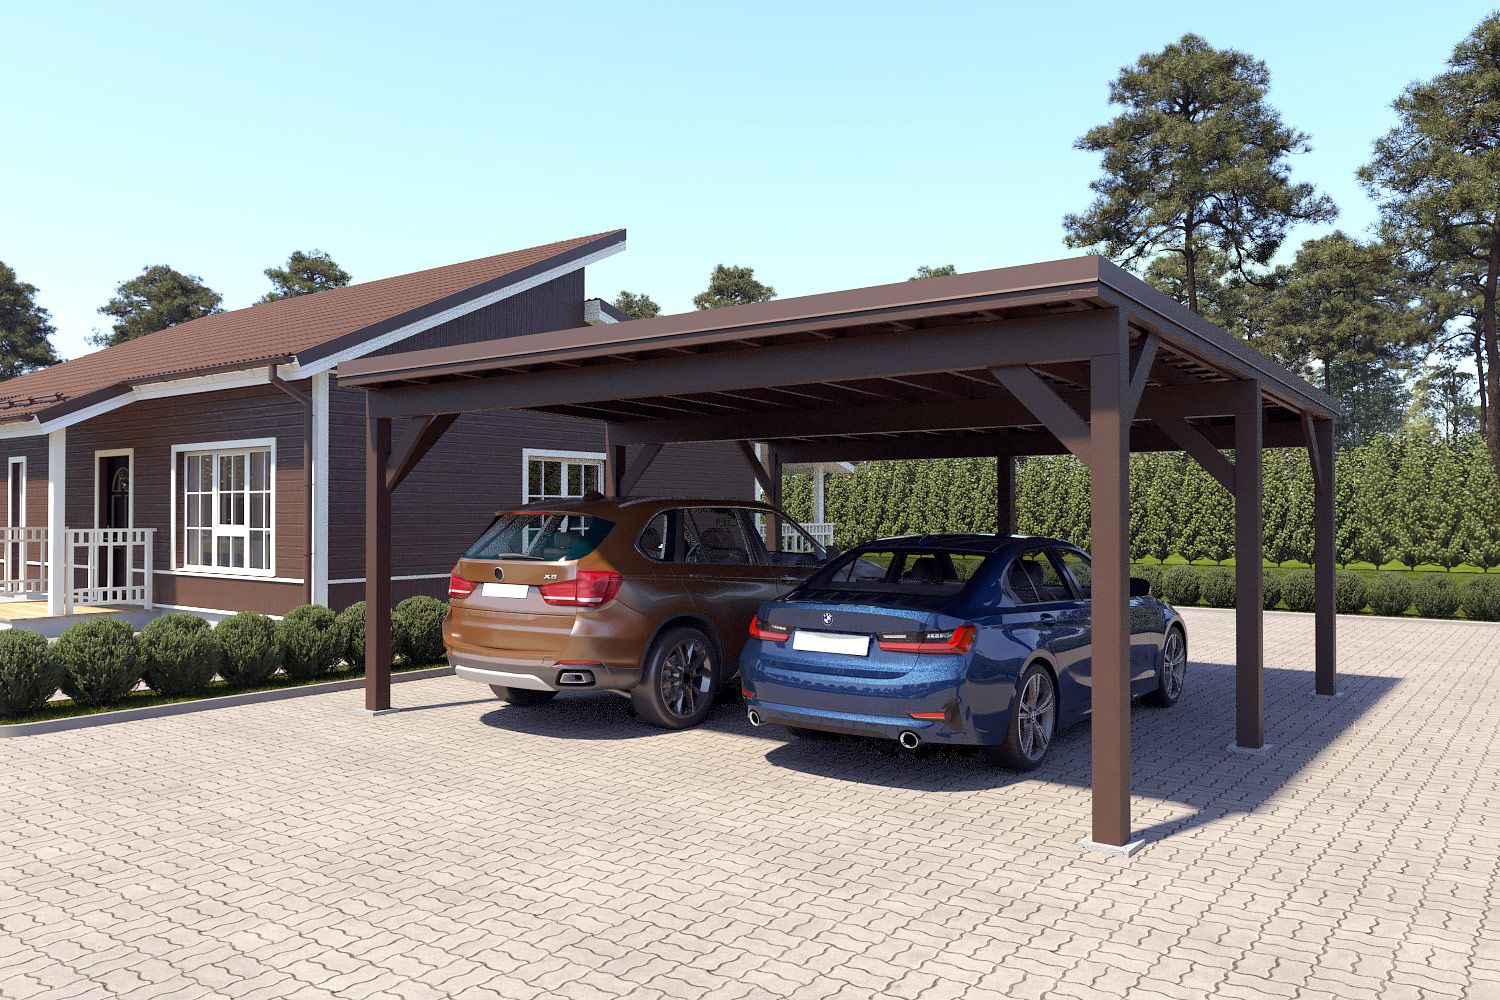 Dubbele carport "Stable" 6 x 6 m (LxB) / 250 kg/m² dak belasting / 36 m² / Grijsbruin met donkerbruin dak